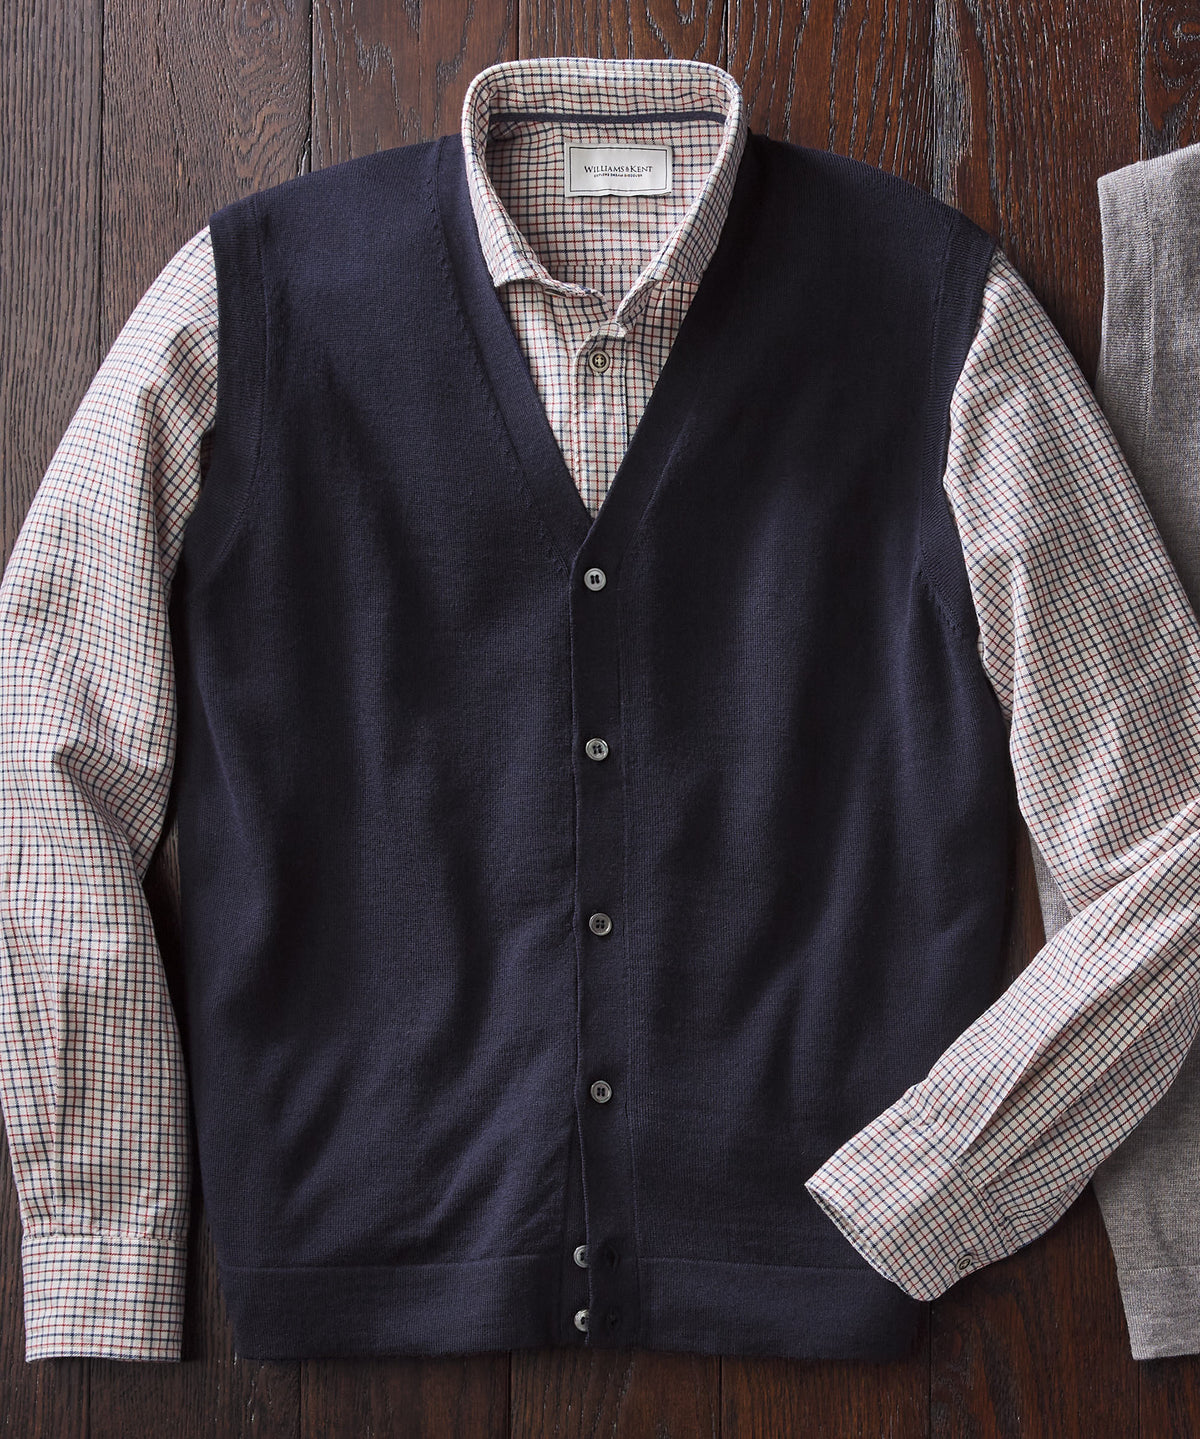 Alan Paine Merino Wool Button-Front Sweater Vest